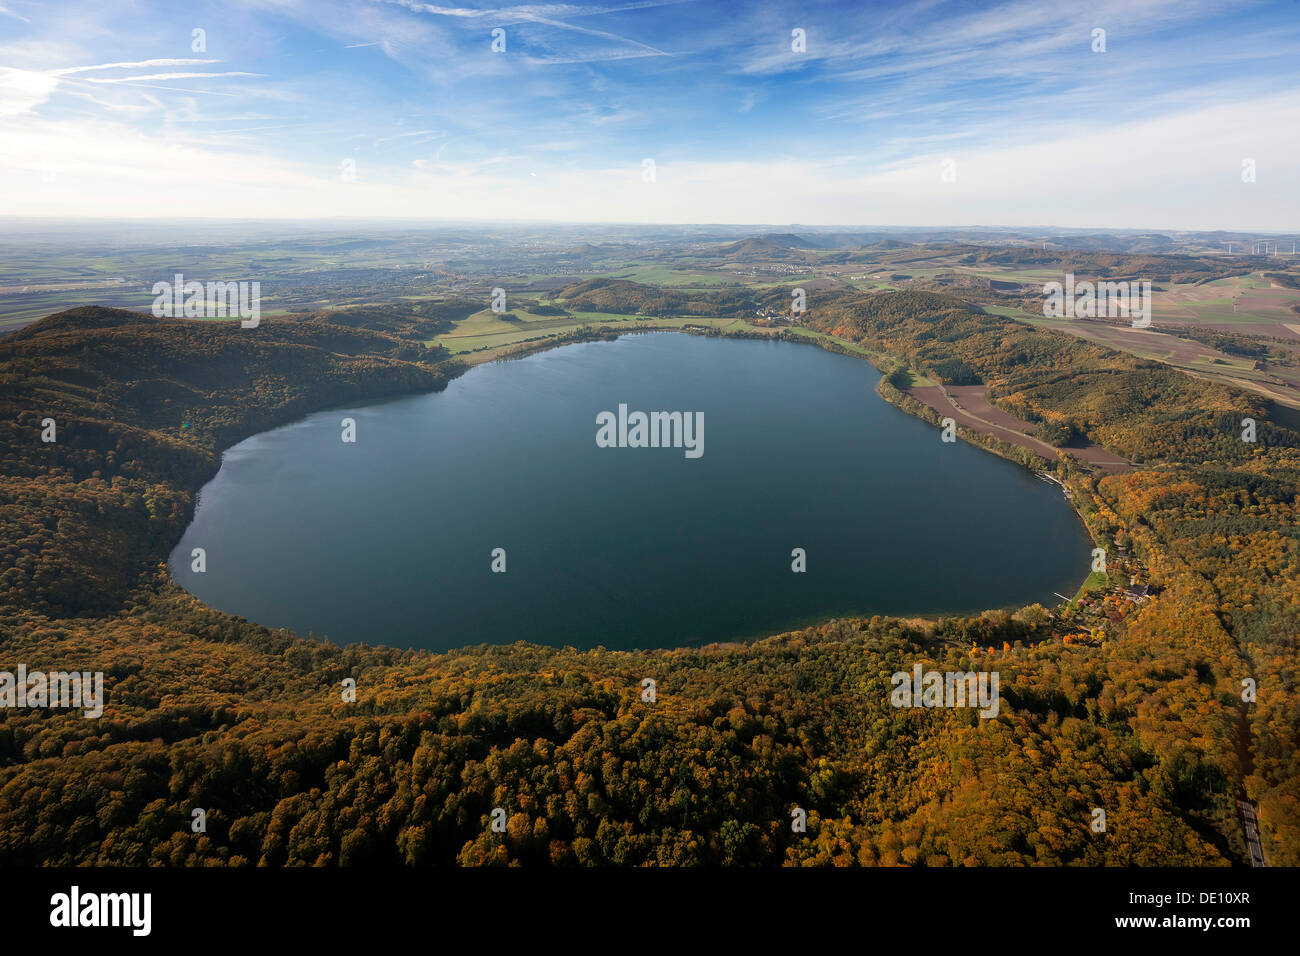 Vista aerea, Vulkanische Osteifel regione lago vulcanico, il cratere del lago, lago Laacher See Foto Stock